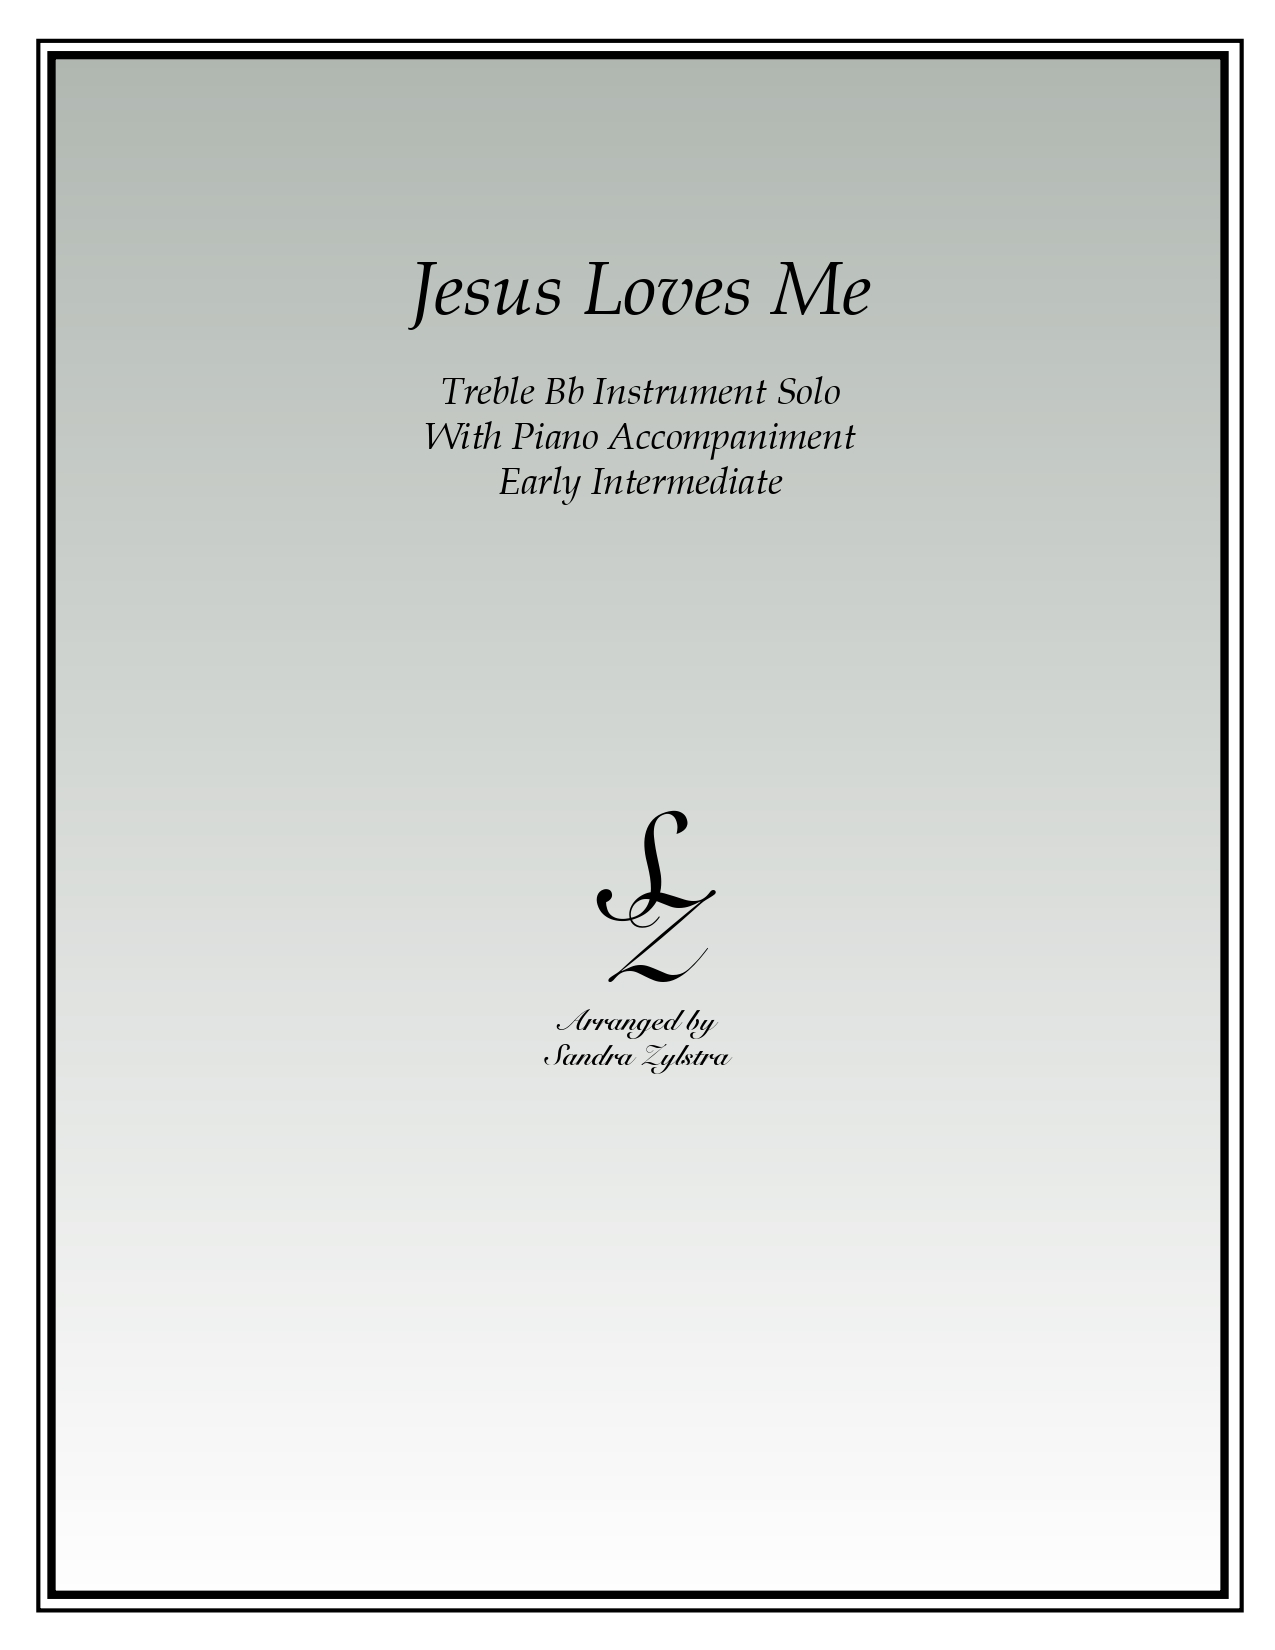 Jesus Loves Me Bb instrument solo part cover page 00011